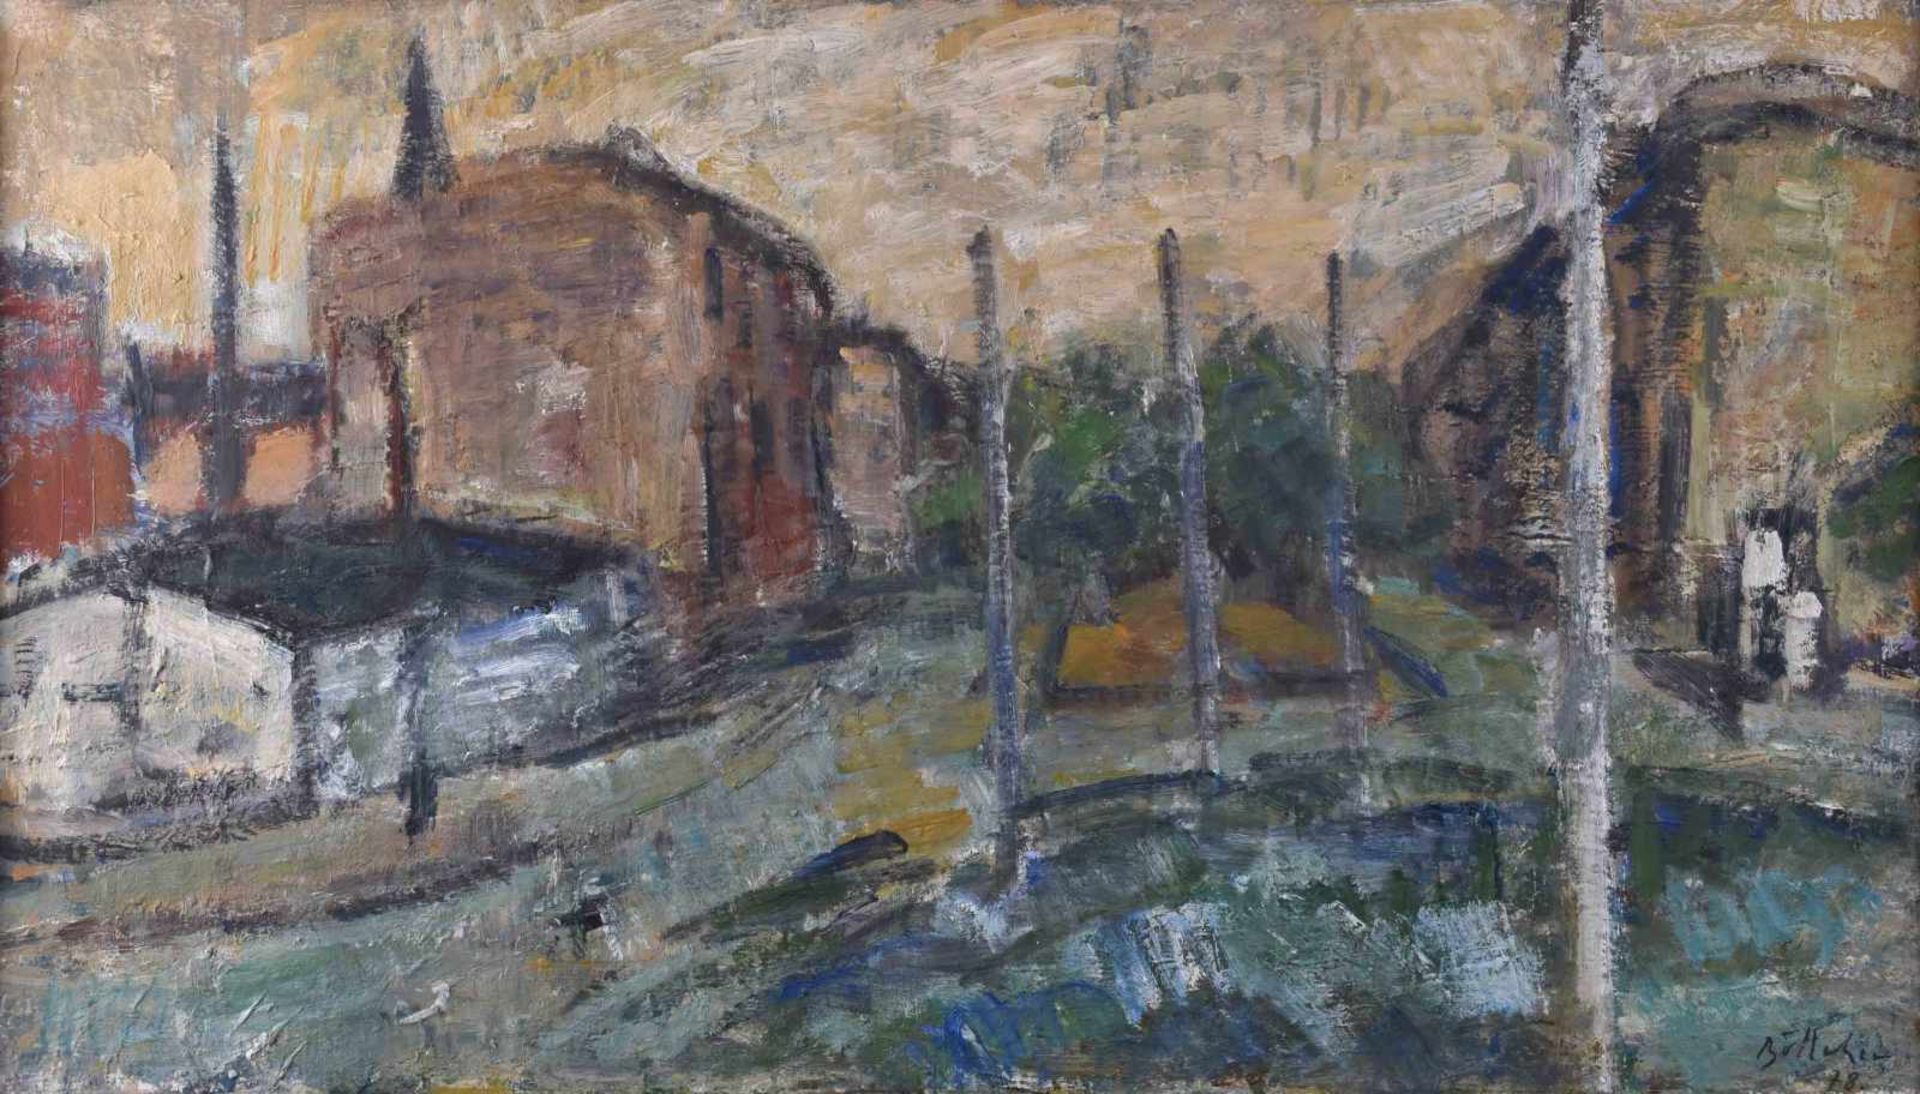 Manfred Richard BÖTTCHER (1933-2001)"Alter Bersarinplatz- Berlin"painting oil / canvas, 41 cm x 70.5